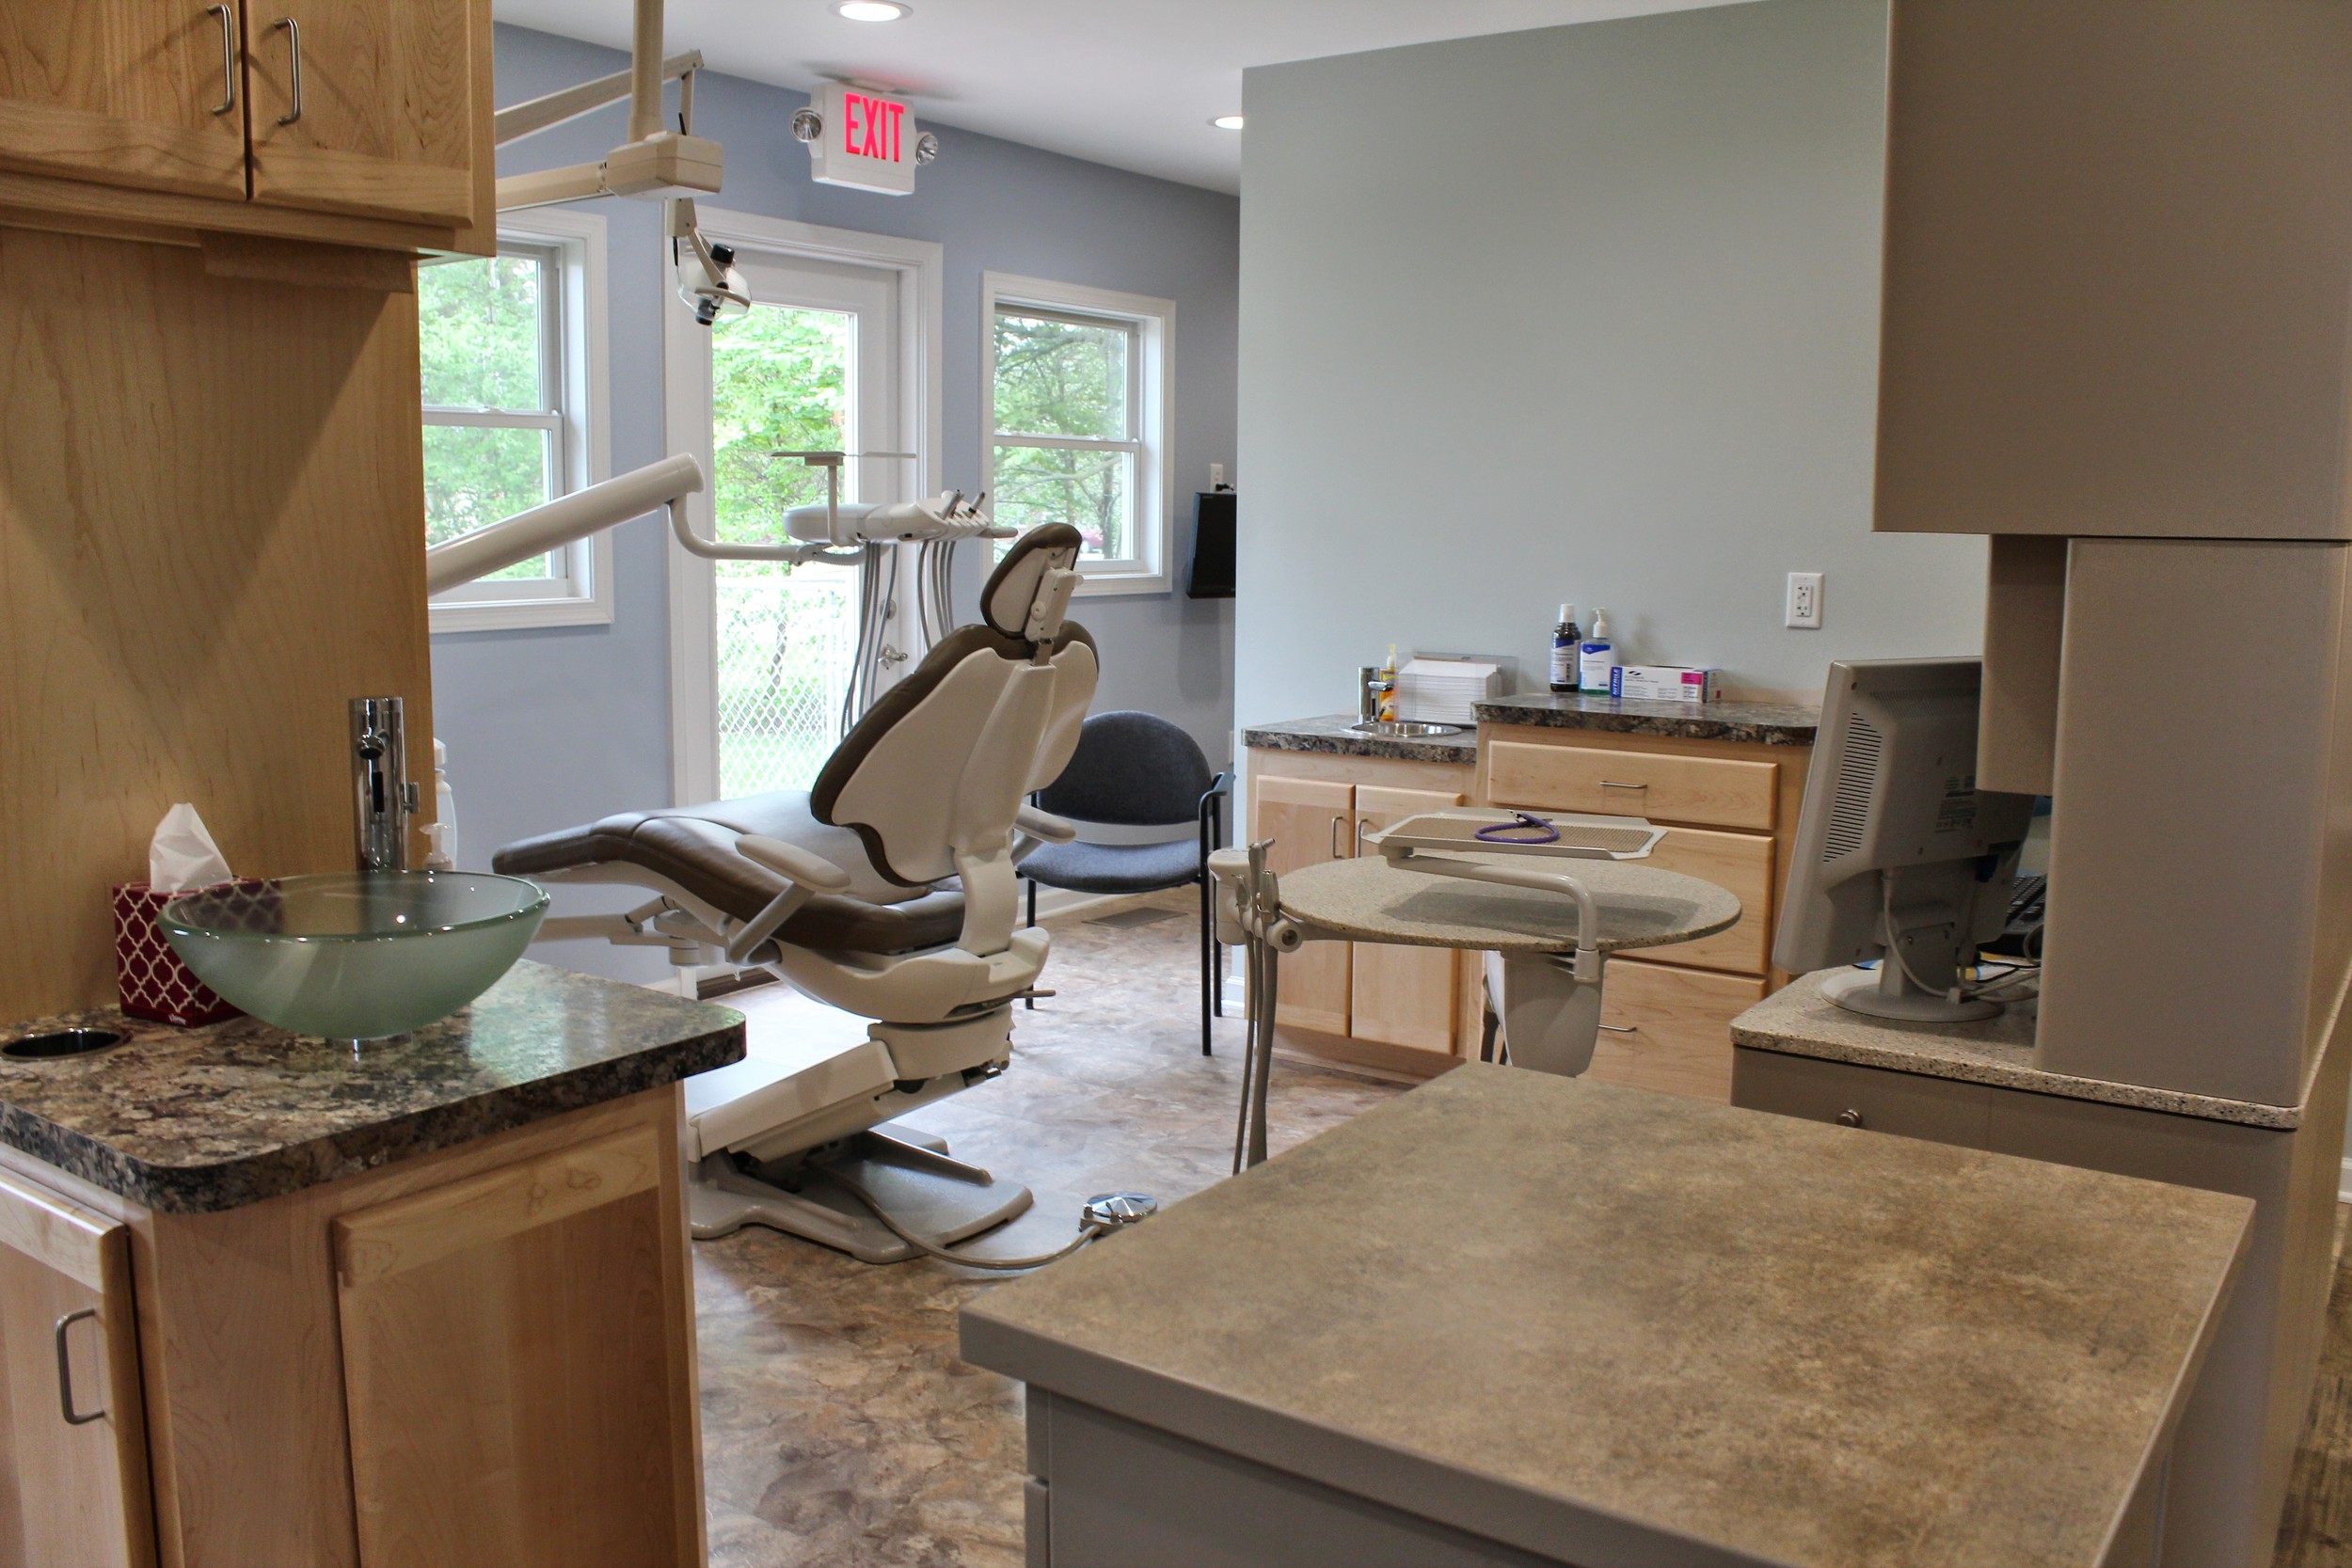 North River Dentistry renovation photos - operatory